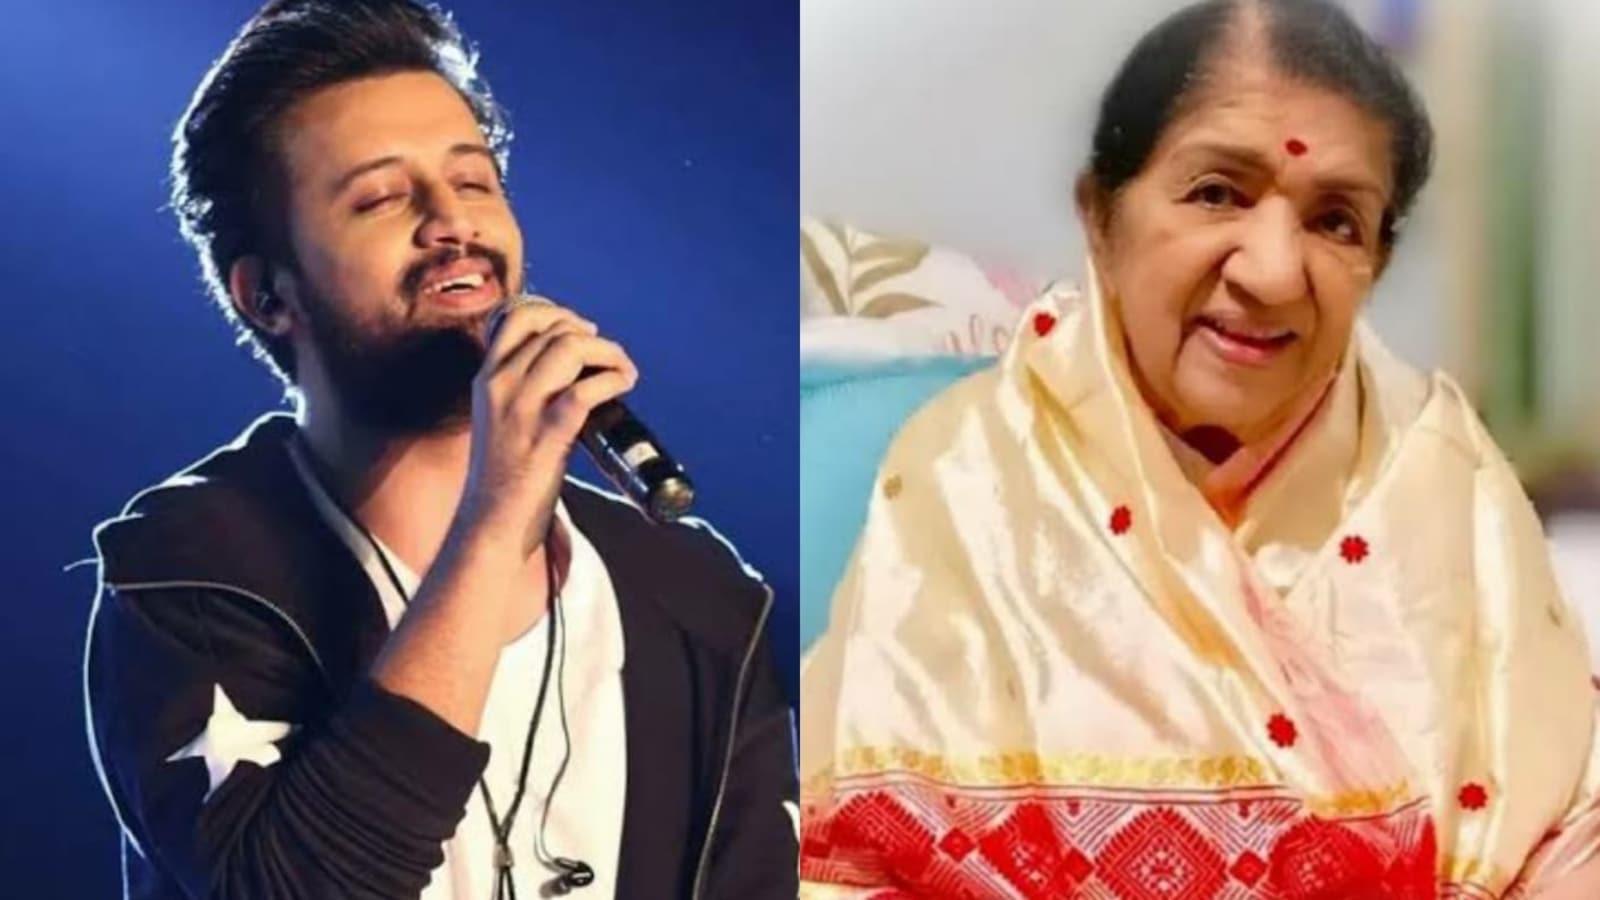 Atif Aslam pays musical tribute to Lata Mangeshkar at Dubai concert, sings Naam Gum Jayega. Watch